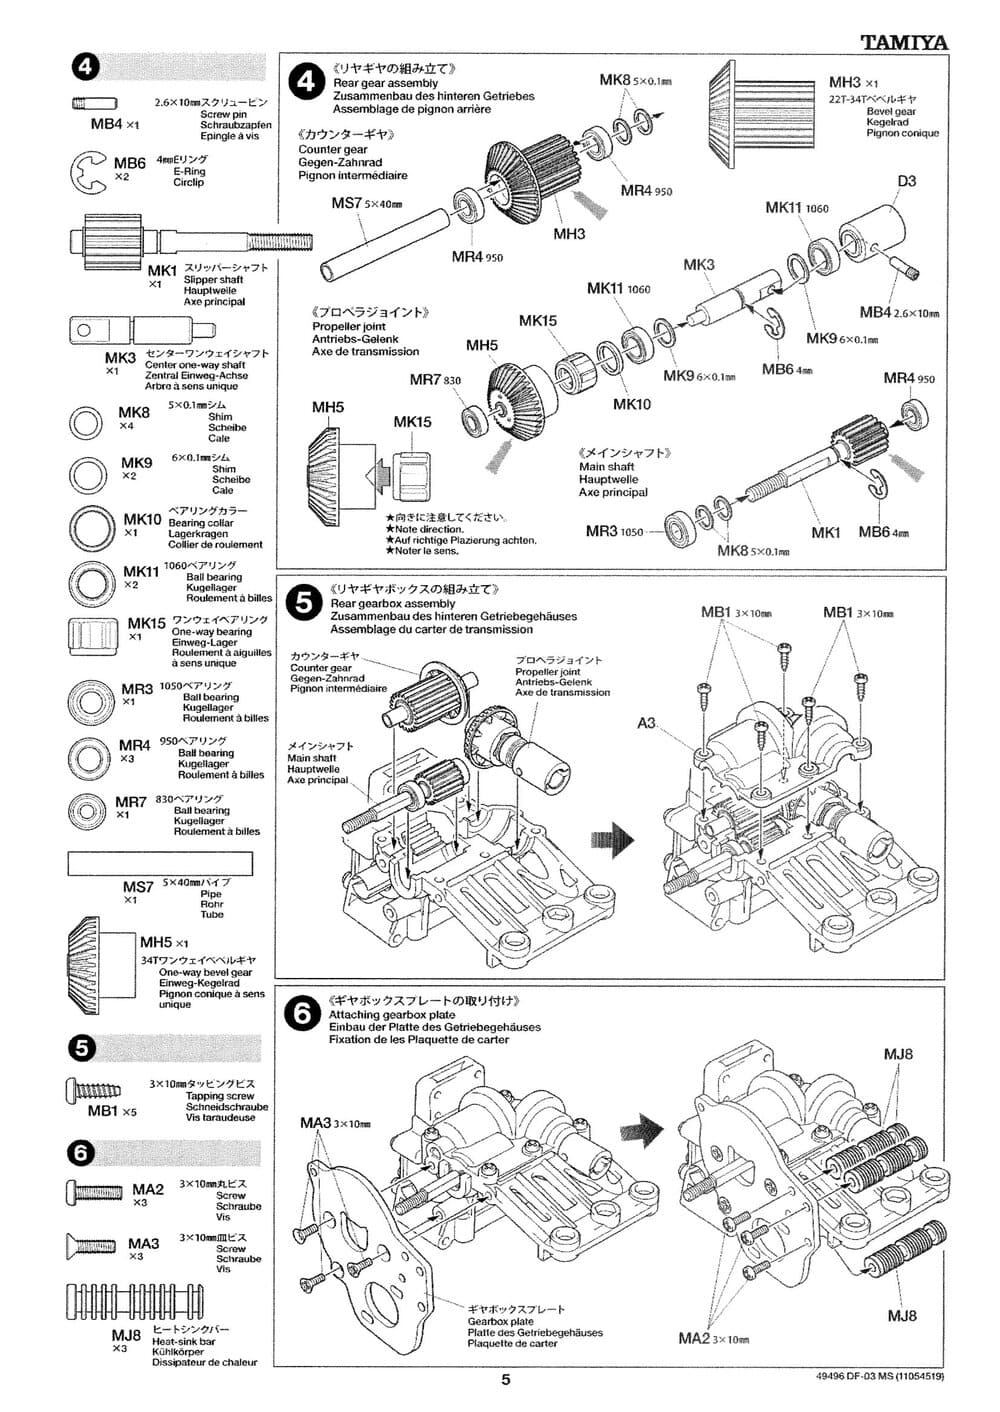 Tamiya - DF-03 MS Chassis Chassis - Manual - Page 5